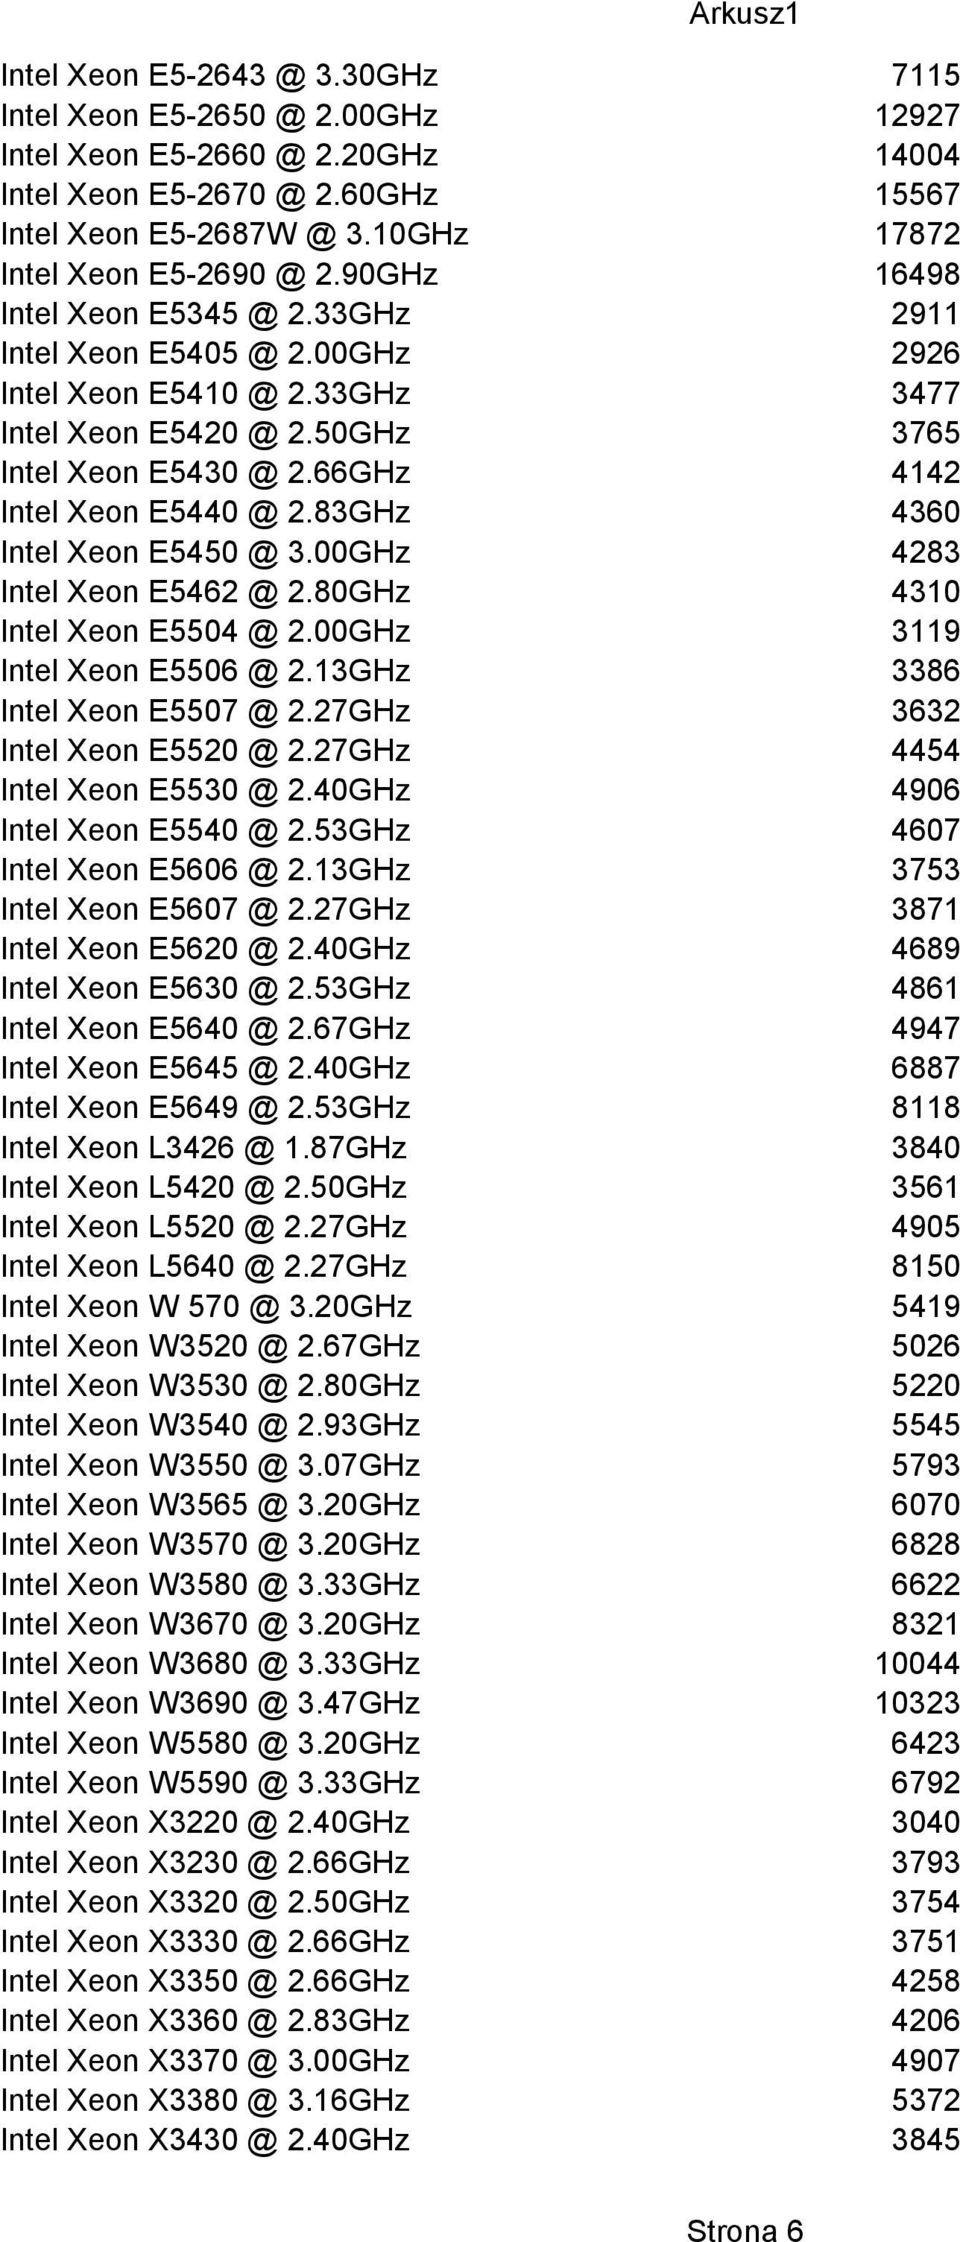 83GHz 4360 Intel Xeon E5450 @ 3.00GHz 4283 Intel Xeon E5462 @ 2.80GHz 4310 Intel Xeon E5504 @ 2.00GHz 3119 Intel Xeon E5506 @ 2.13GHz 3386 Intel Xeon E5507 @ 2.27GHz 3632 Intel Xeon E5520 @ 2.